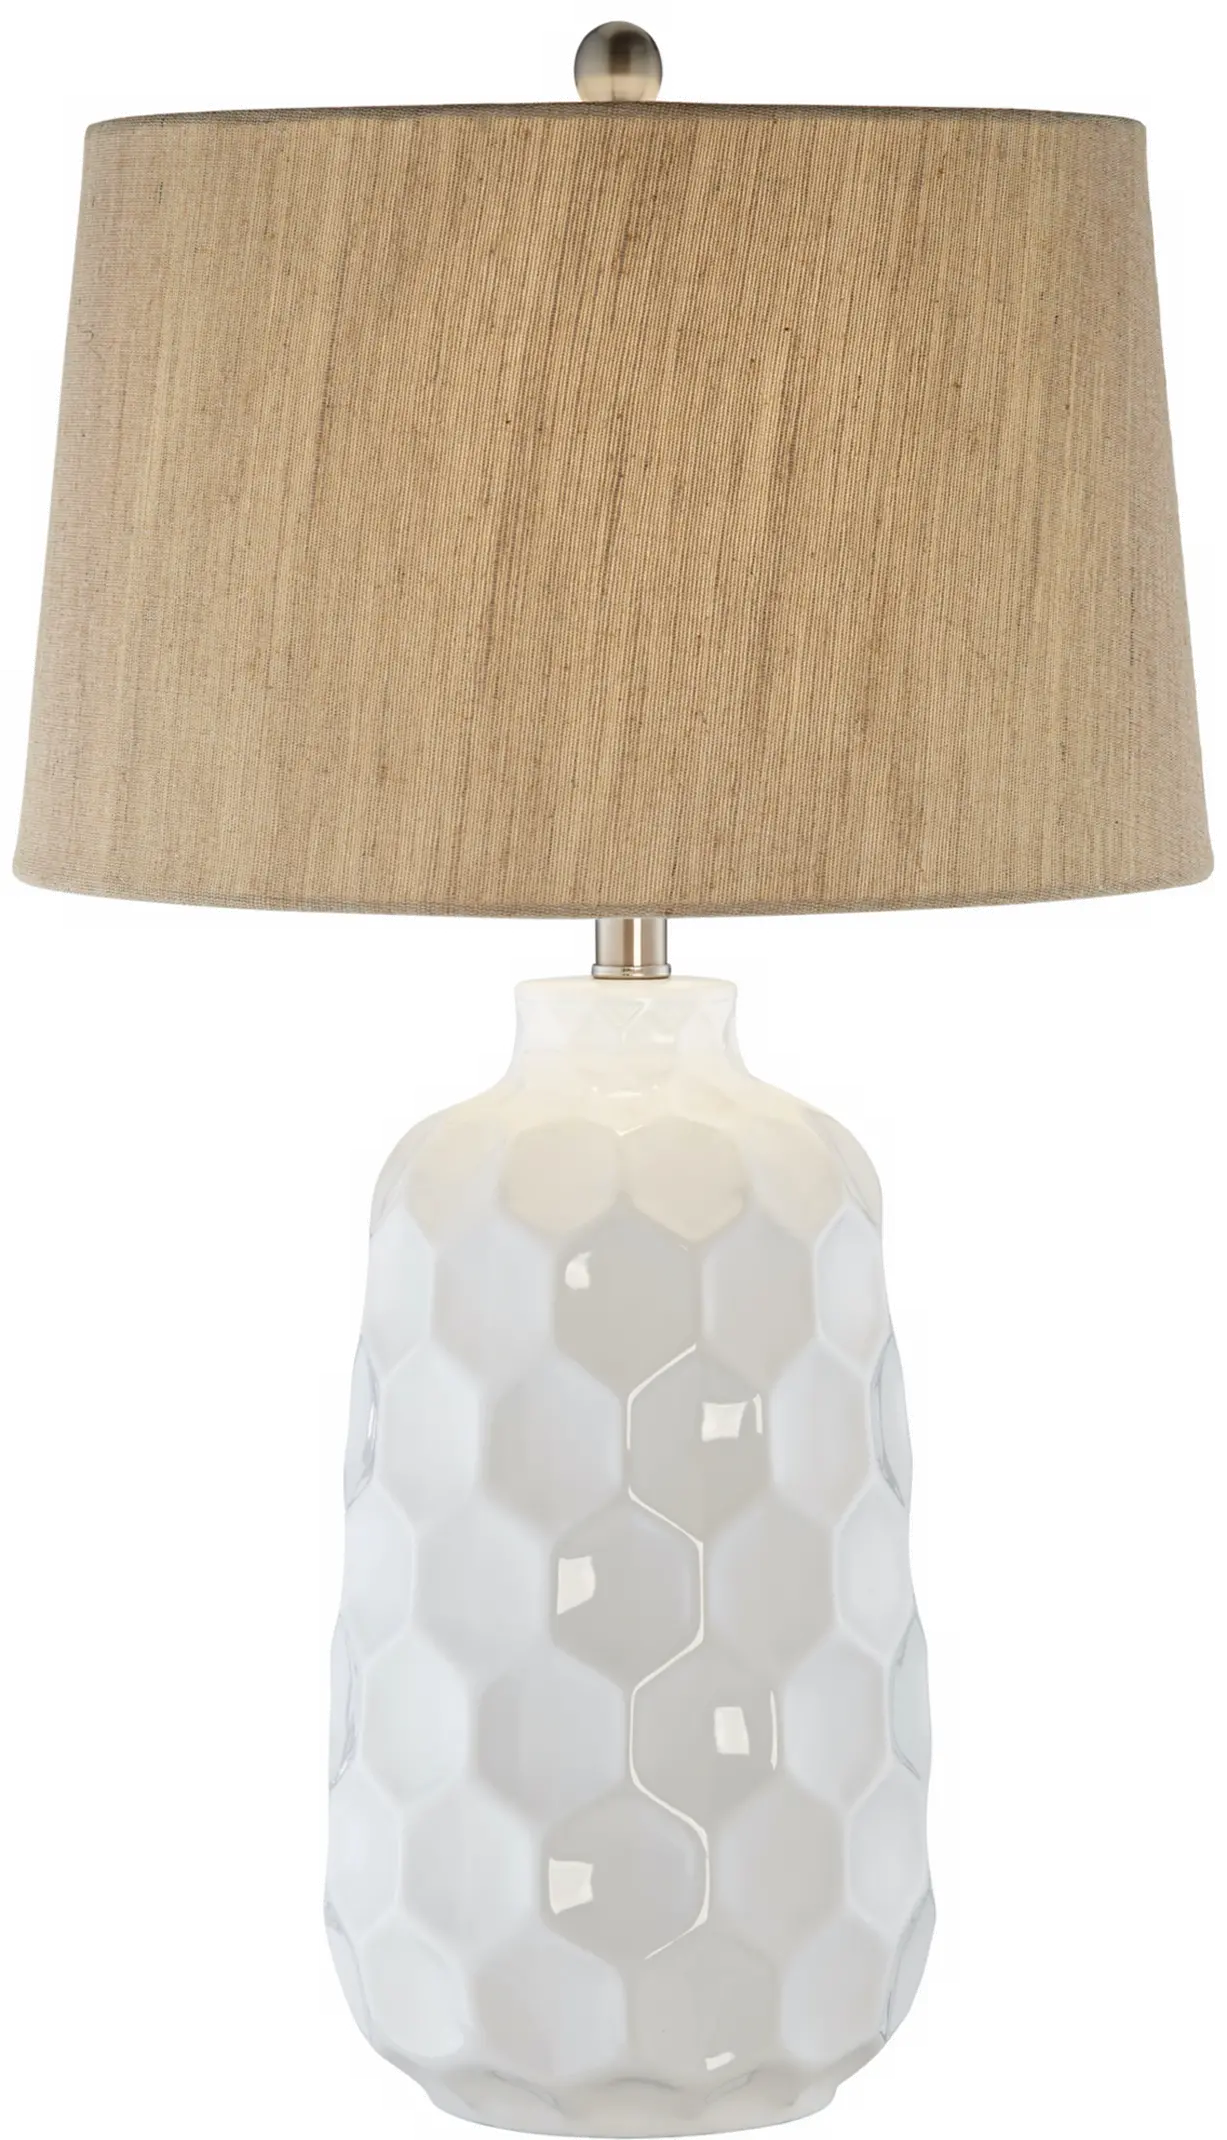 Glossy White Ceramic Honeycomb Table Lamp - Dreams